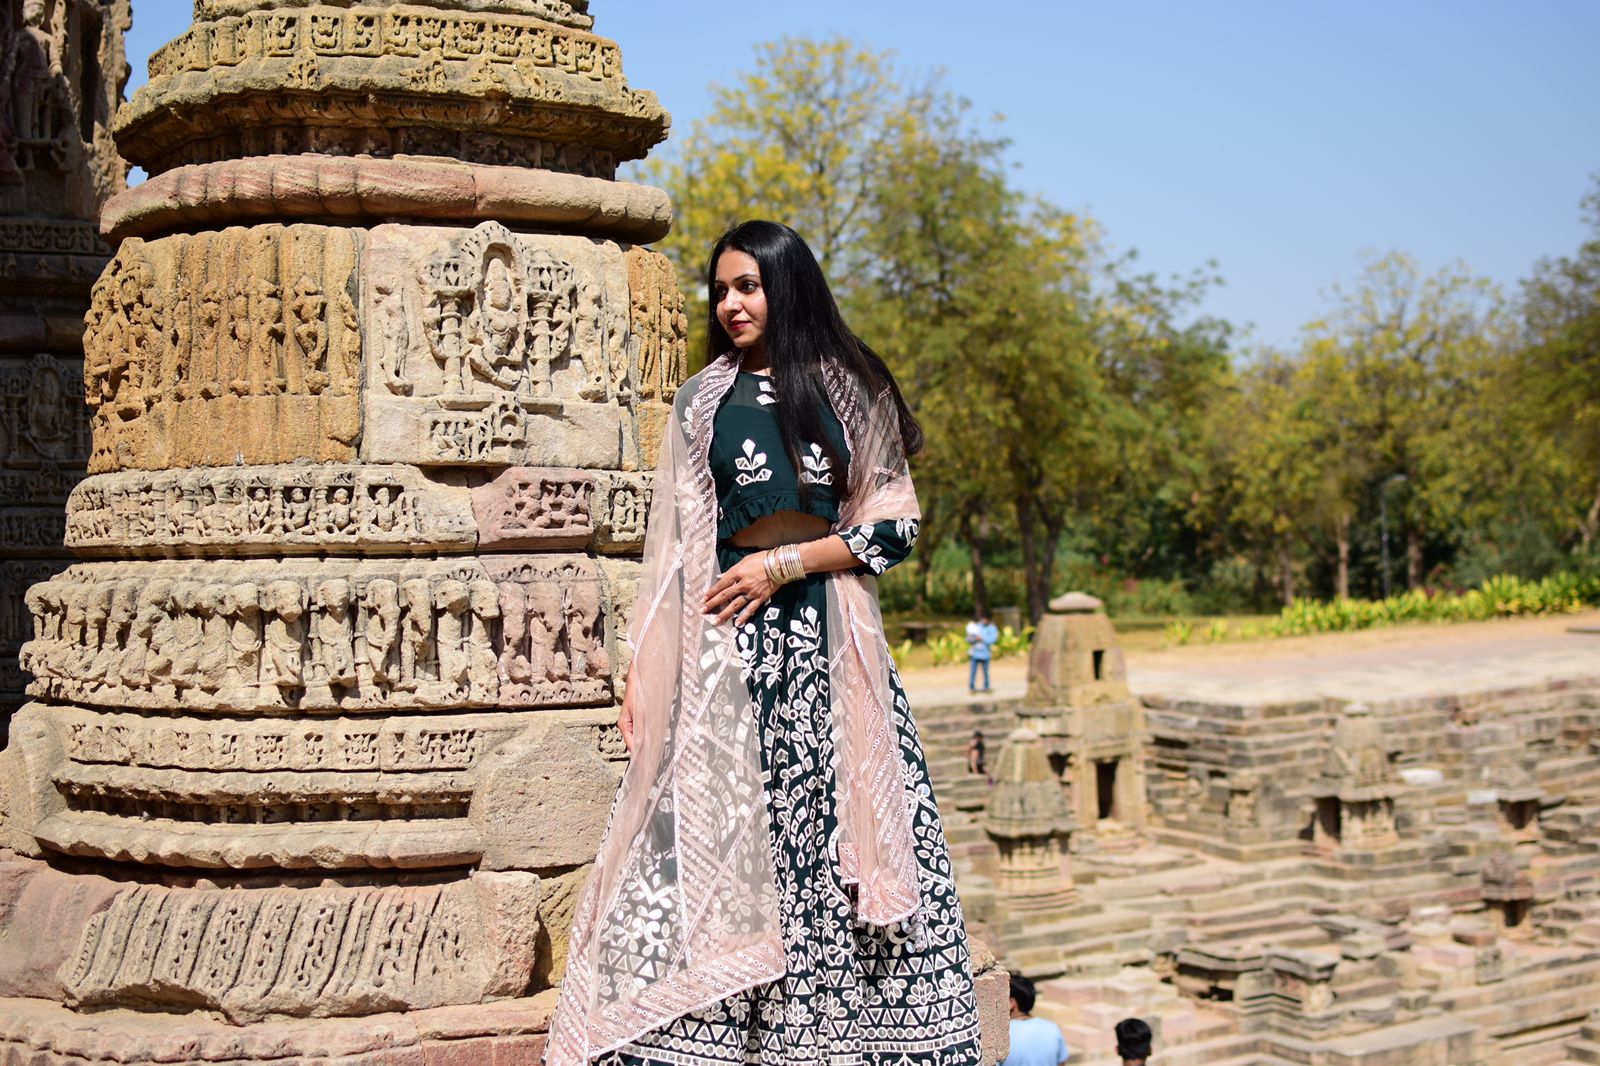 I am Shailly Shah and I am a Fashion Designer